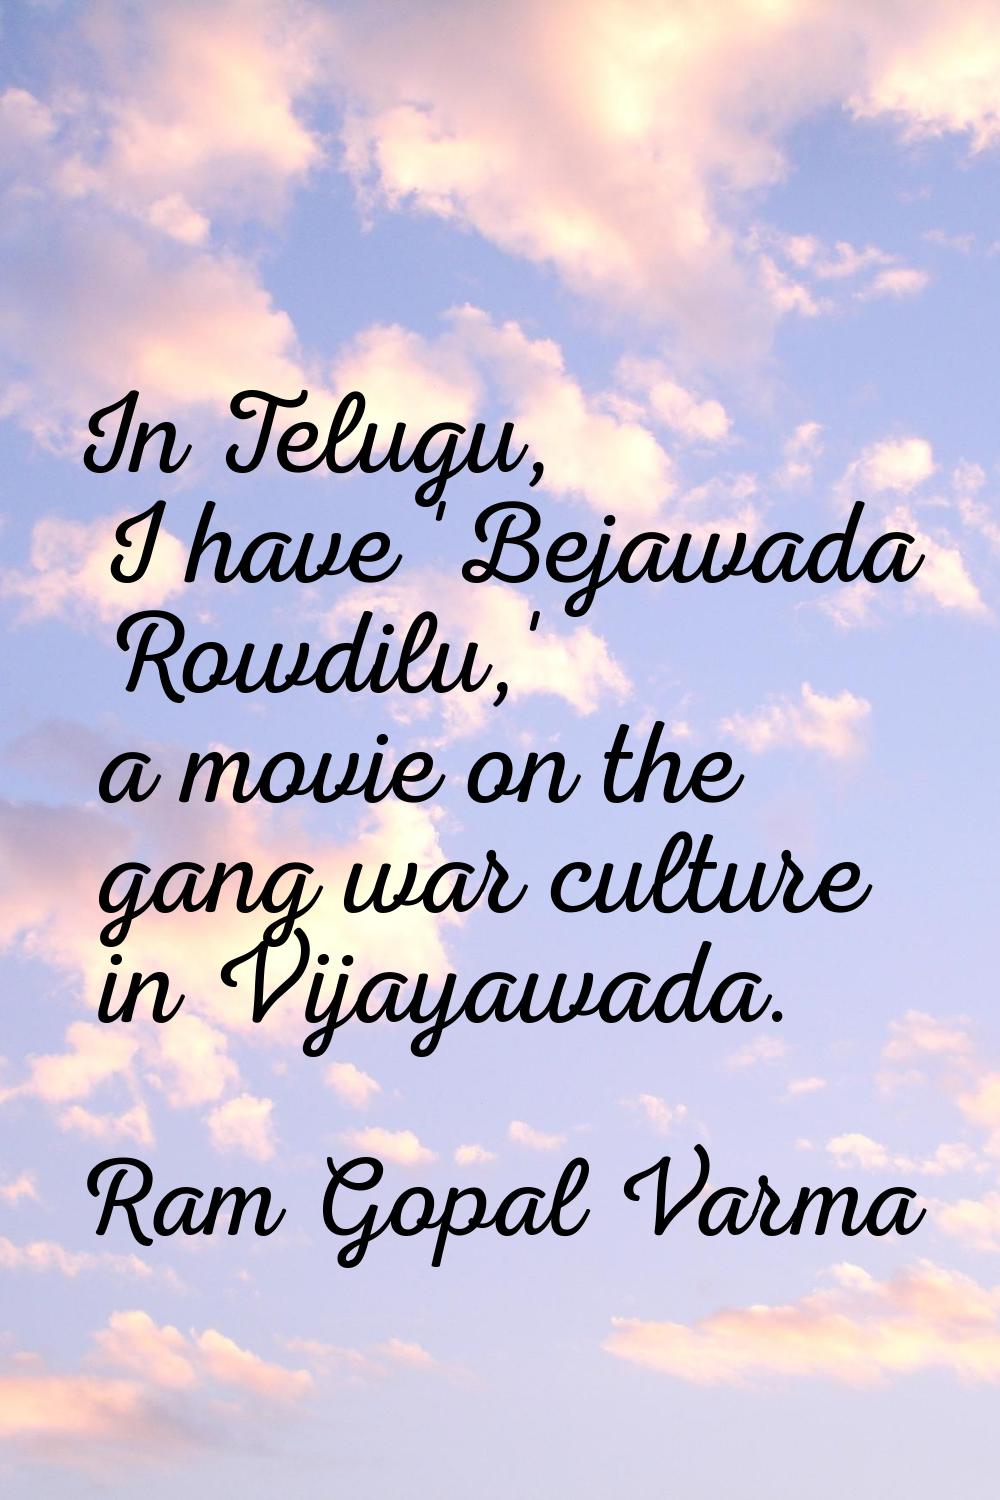 In Telugu, I have 'Bejawada Rowdilu,' a movie on the gang war culture in Vijayawada.